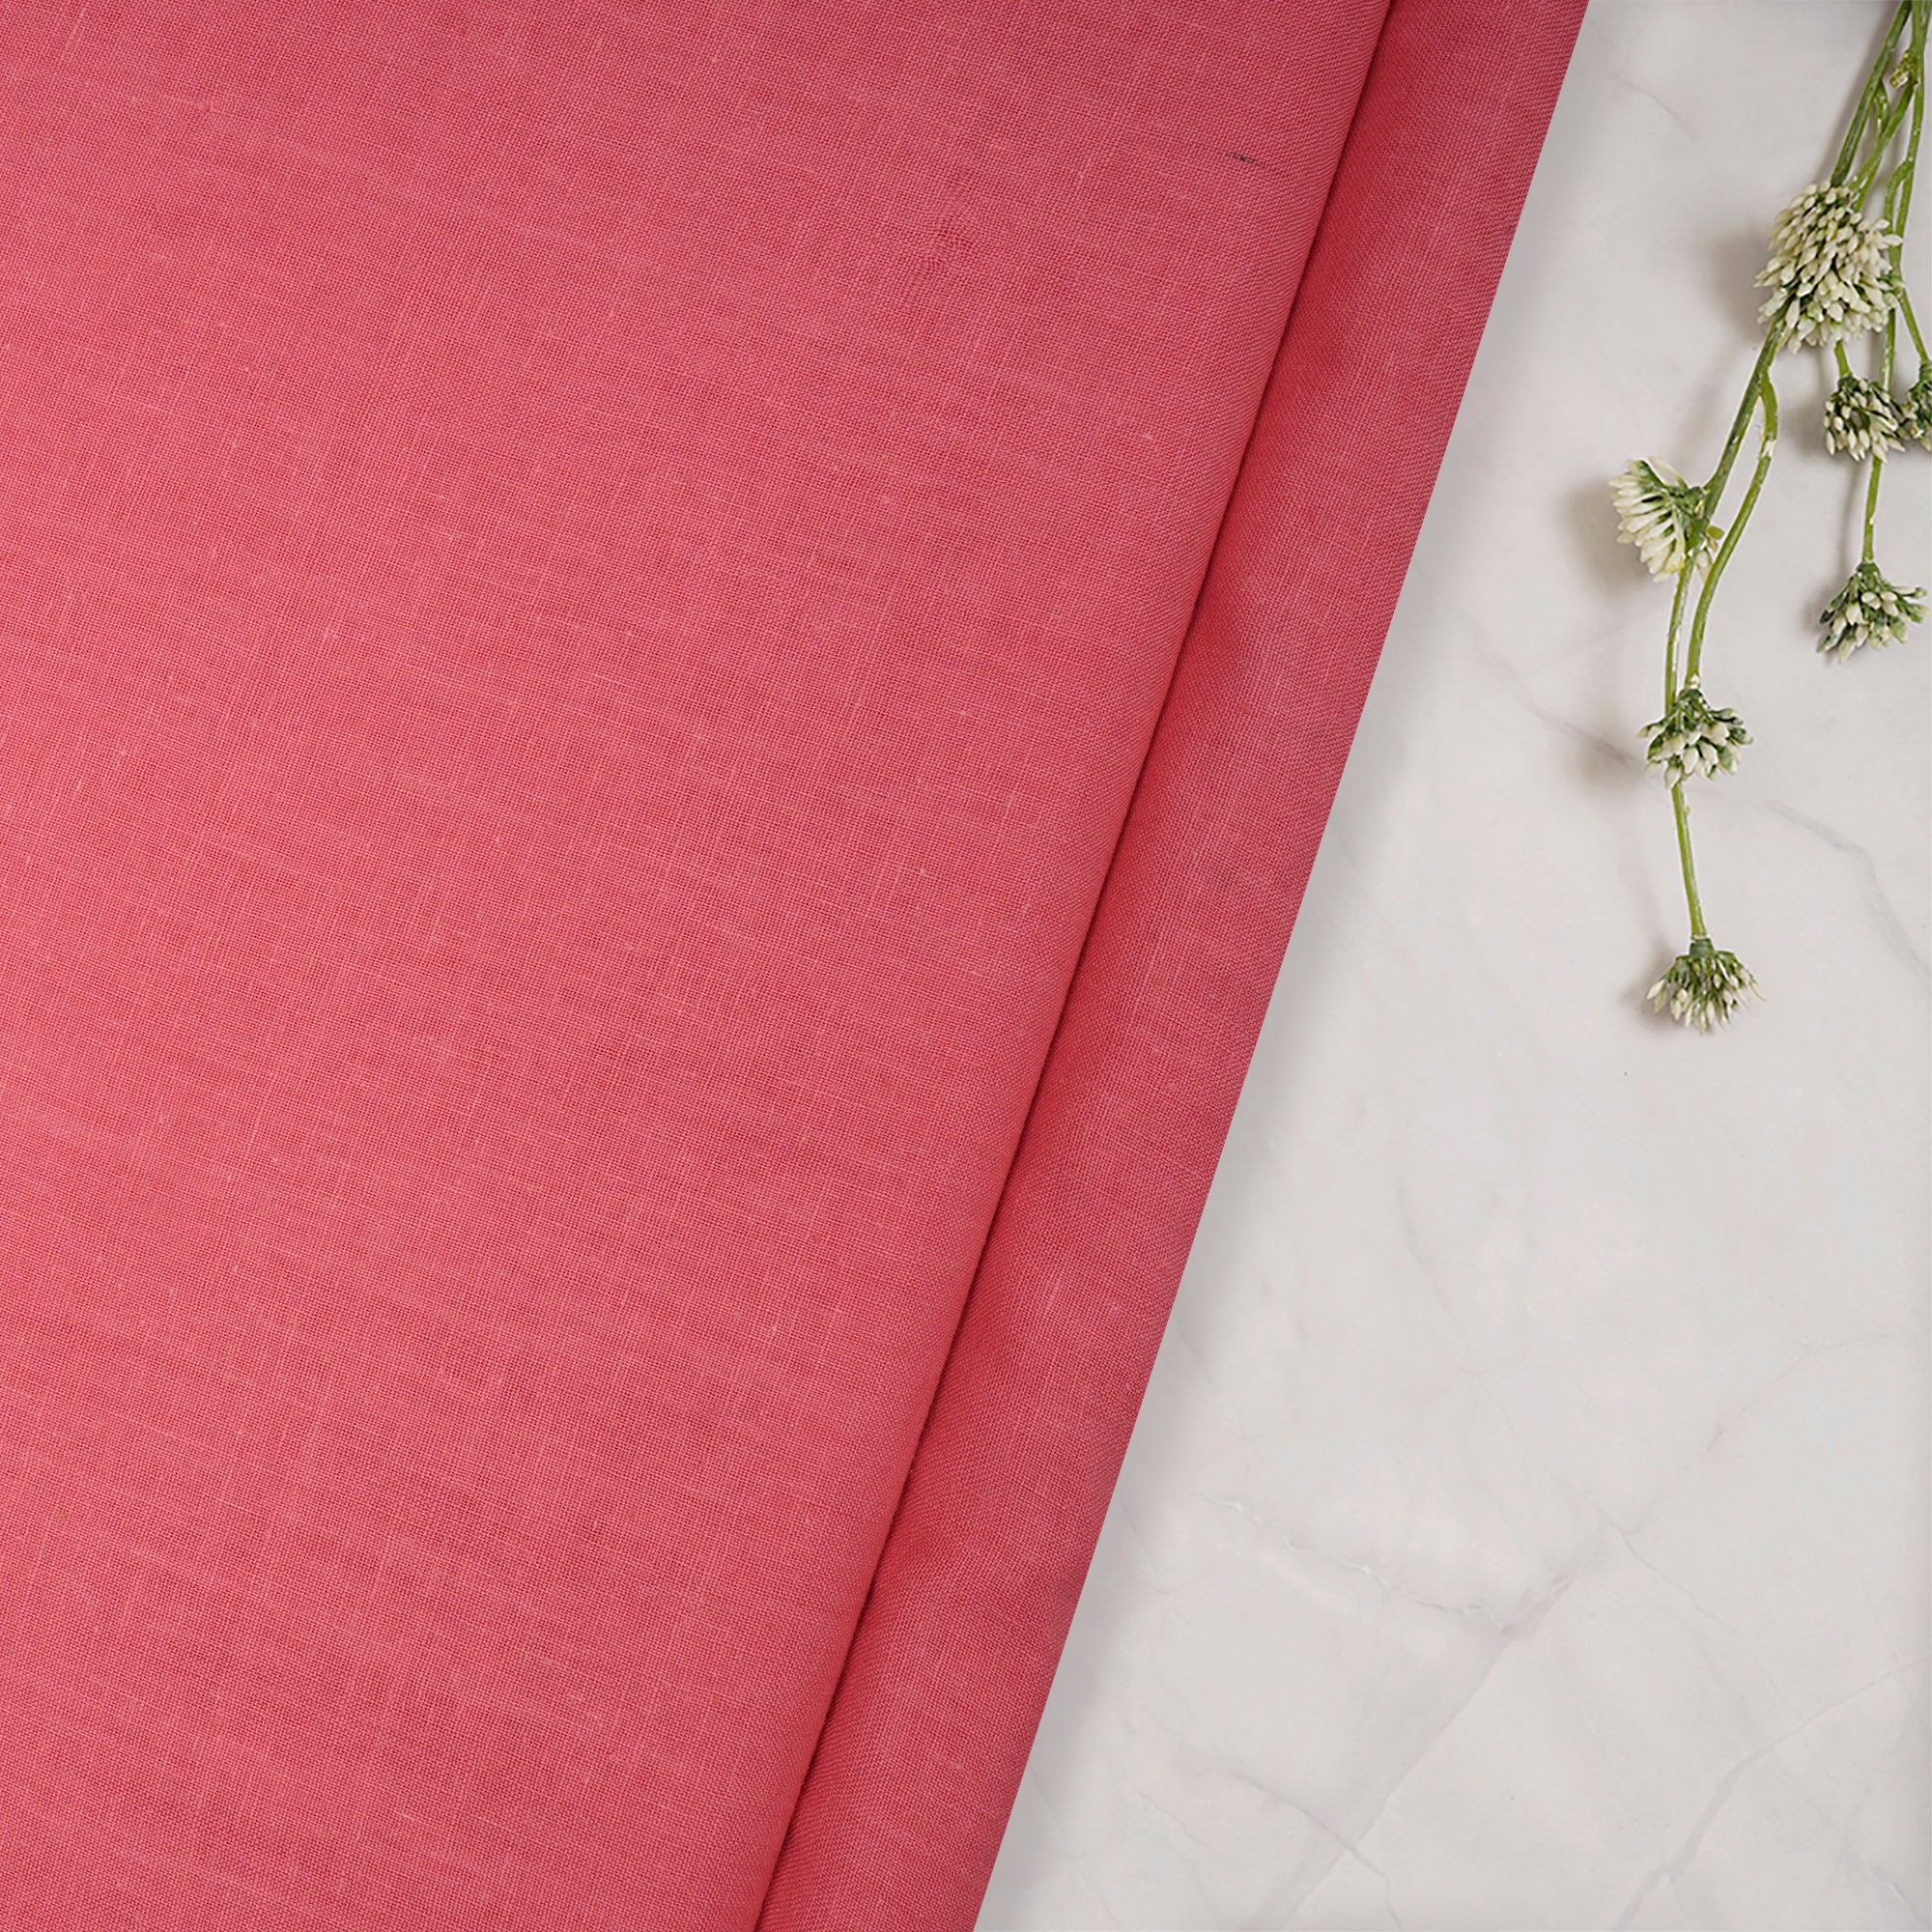 Pink Color Handwoven Handspun Cotton Fabric